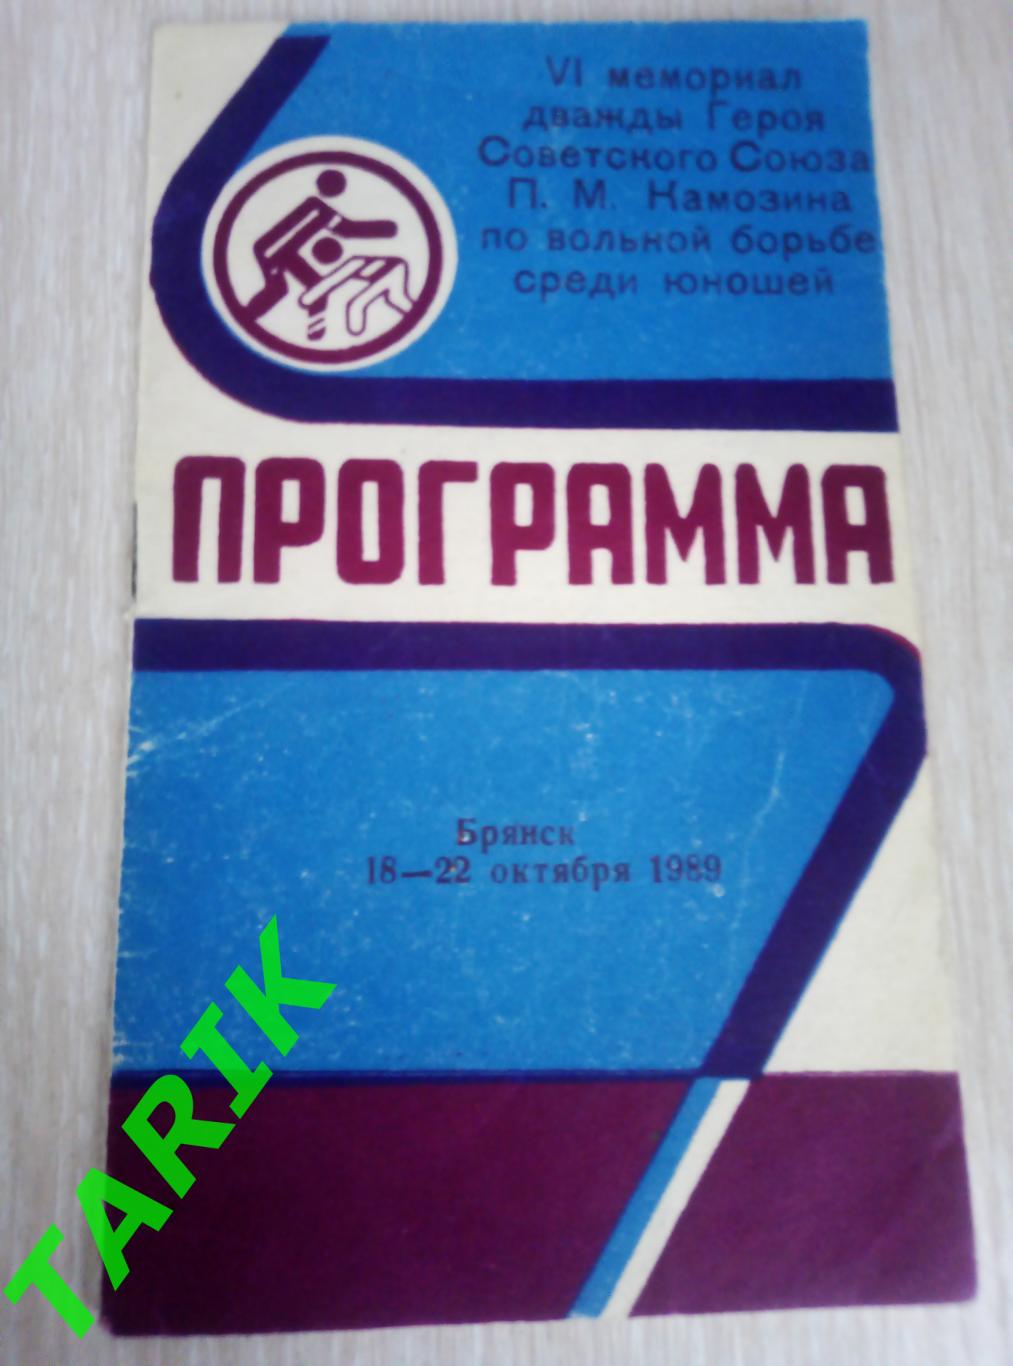 Вольная борьба Брянск 18-22.10.1989